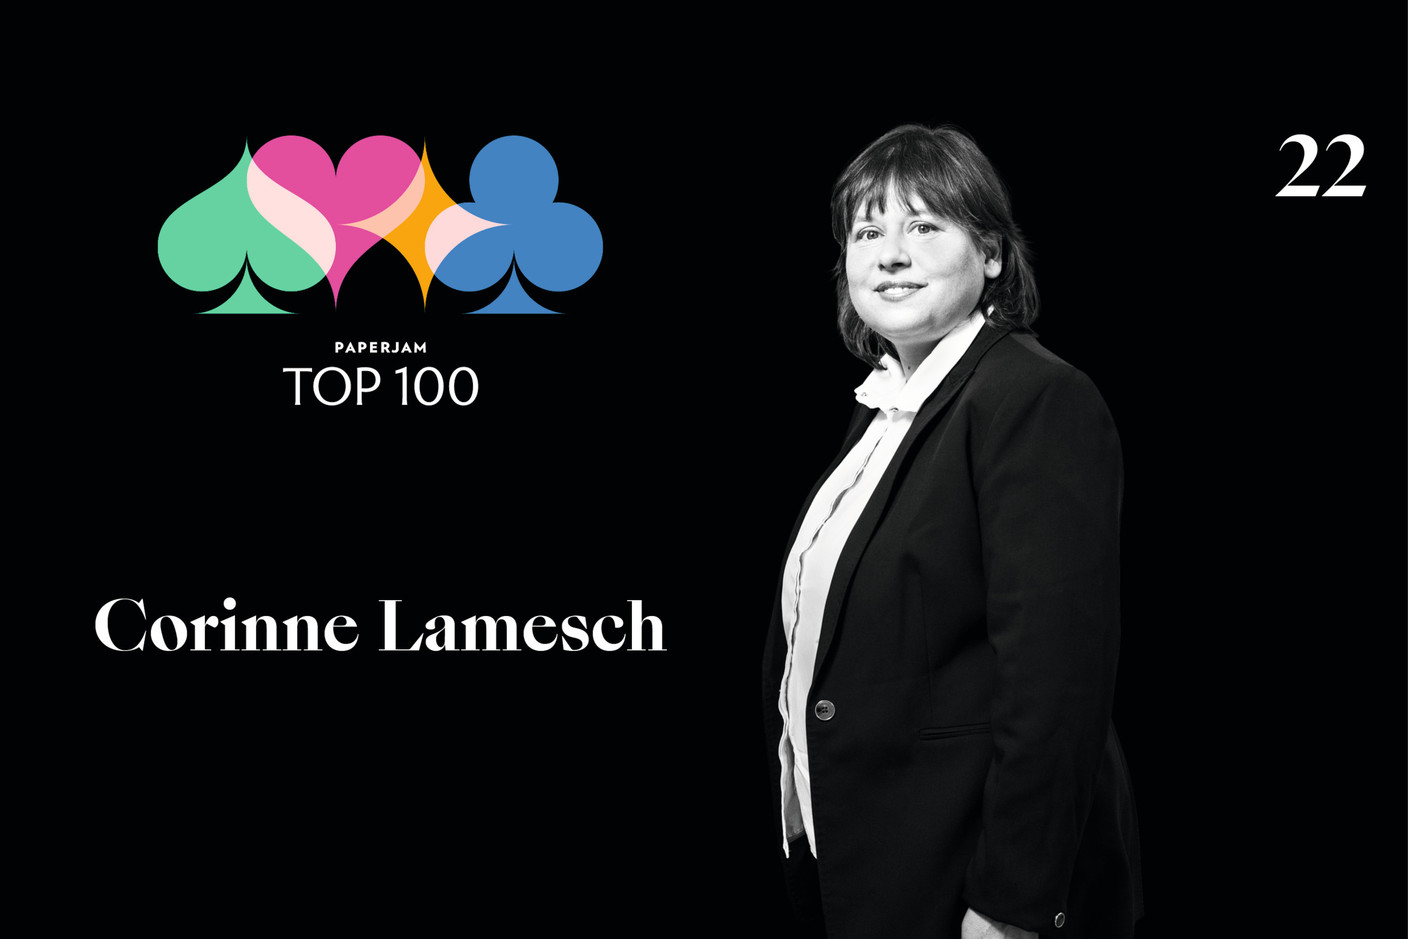 Corinne Lamesch, 22e du Paperjam Top 100 2020. (Illustration: Maison Moderne)